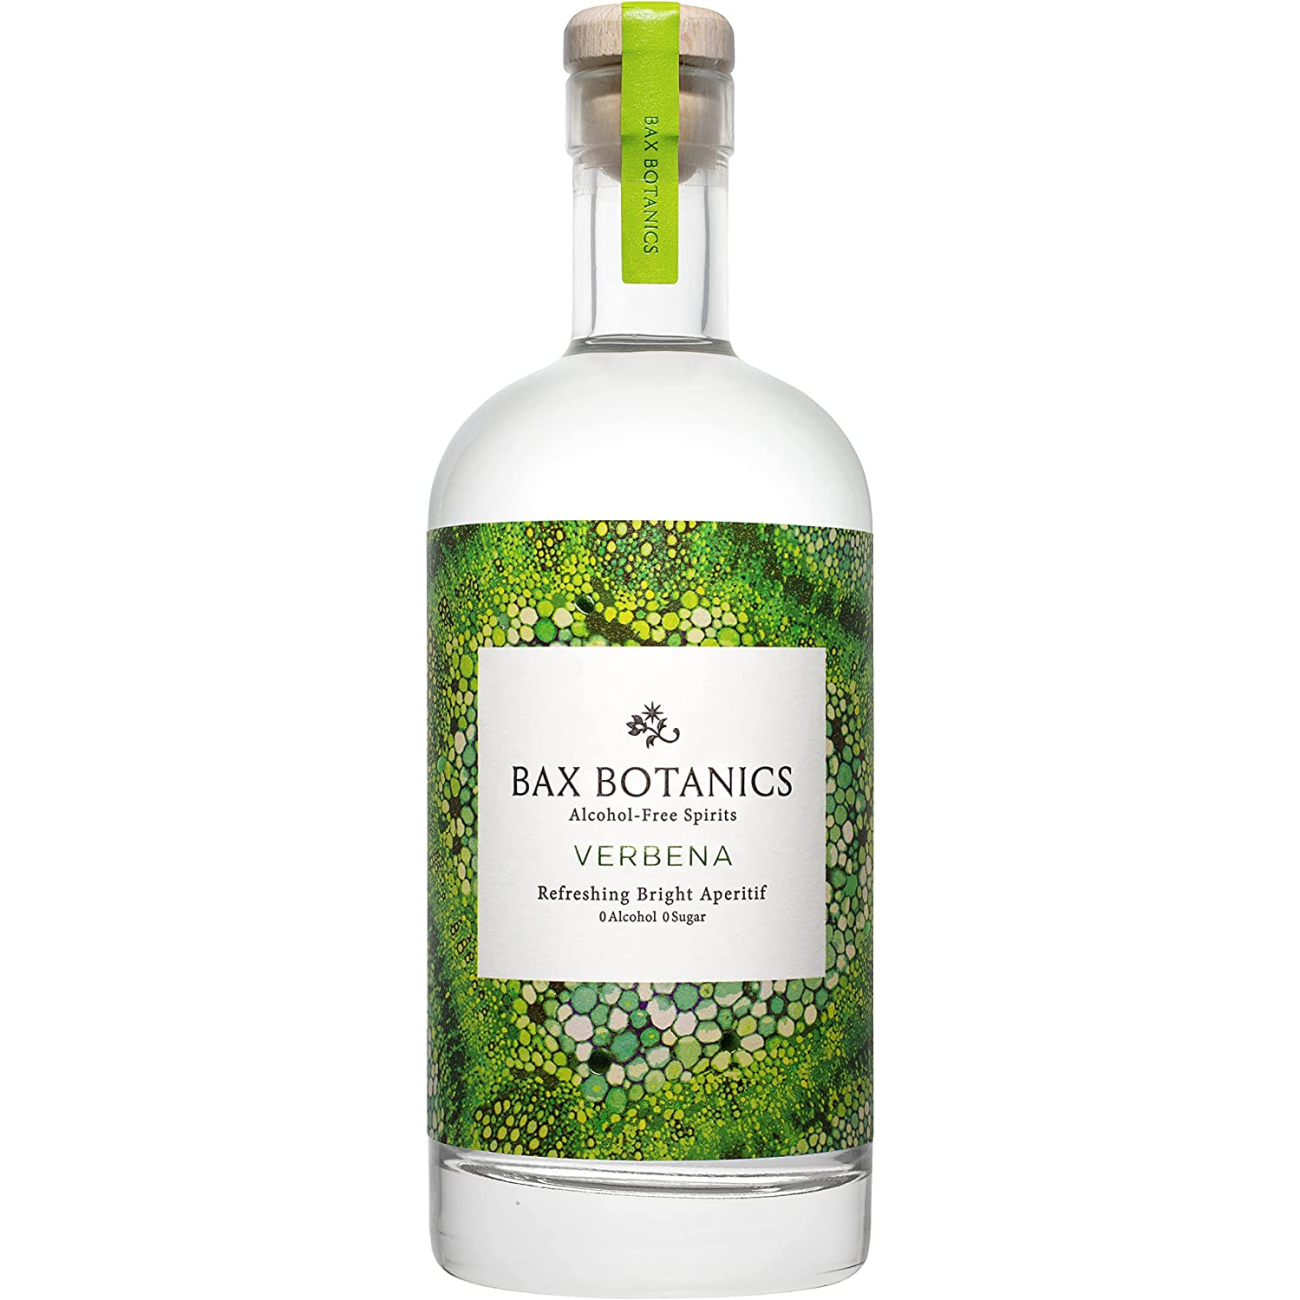 Bax Botanics Verbena Alcohol-Free Spirit